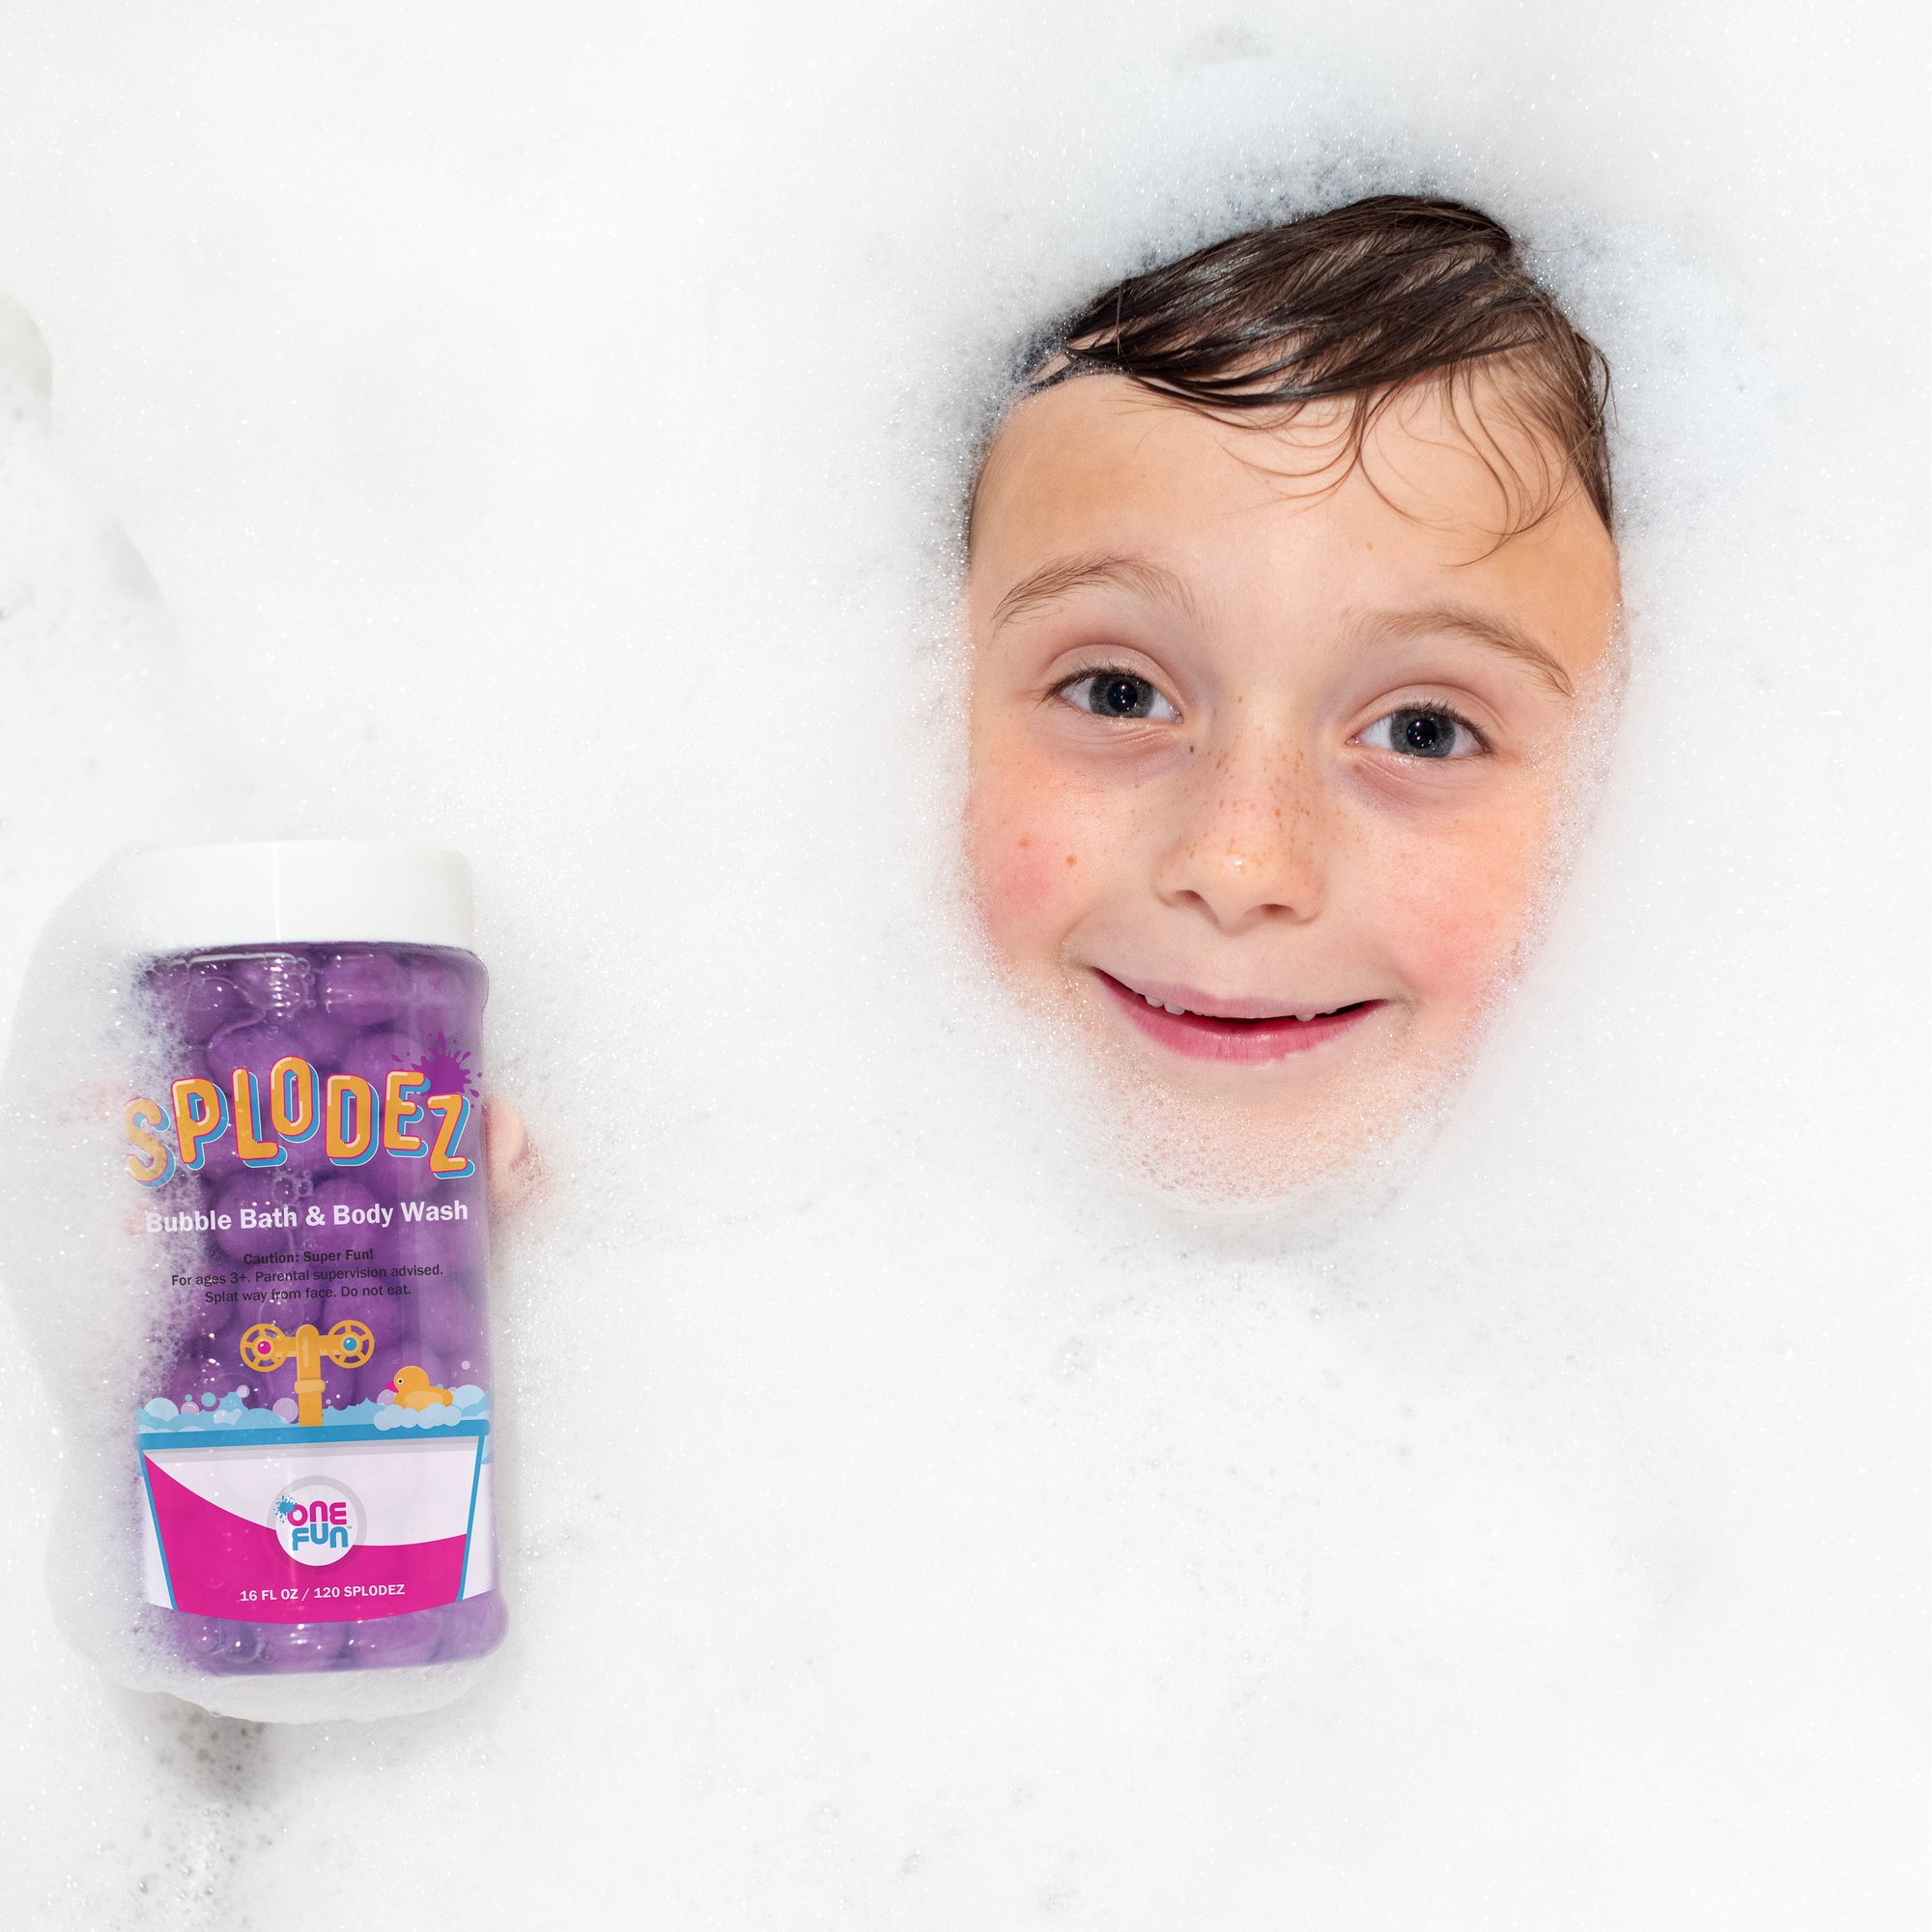 SPLODEZ Bubble Bath & Body Wash - Wholesale